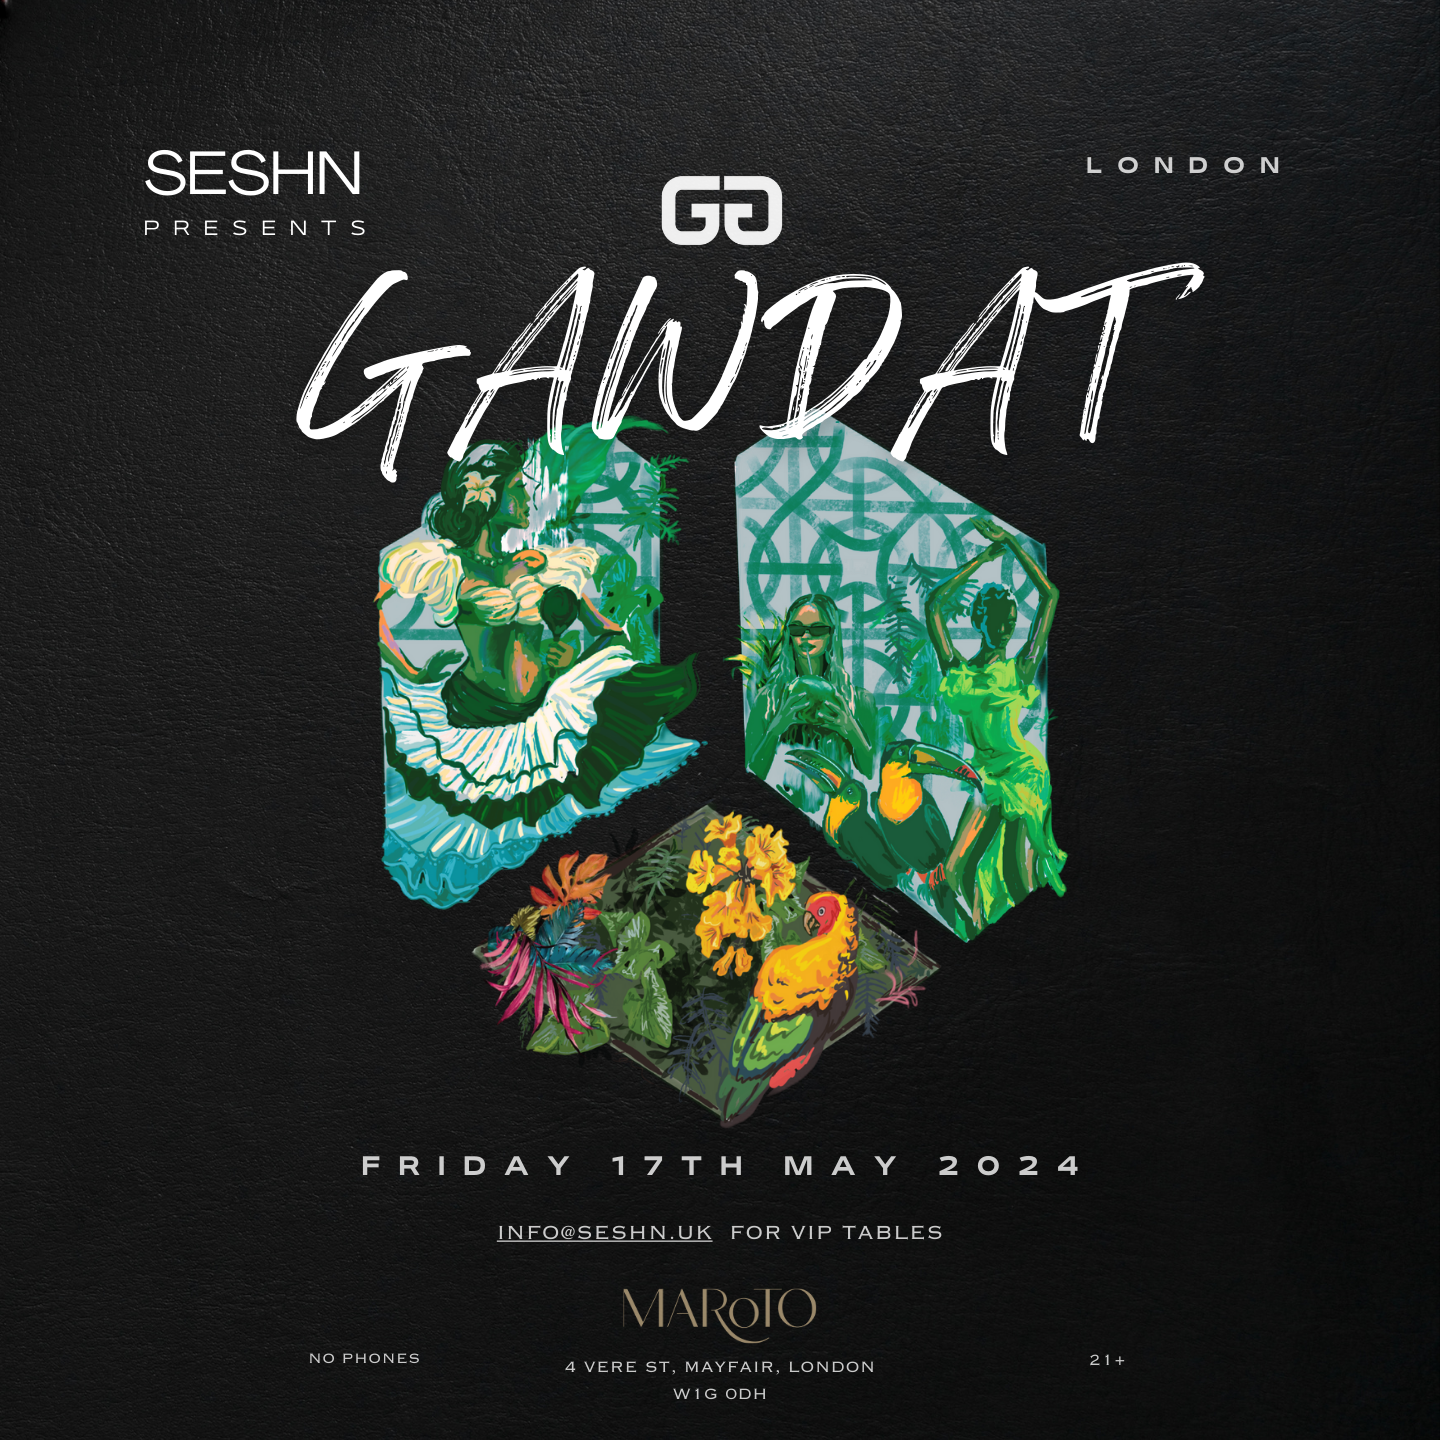 SESHN presents: Gawdat - フライヤー裏